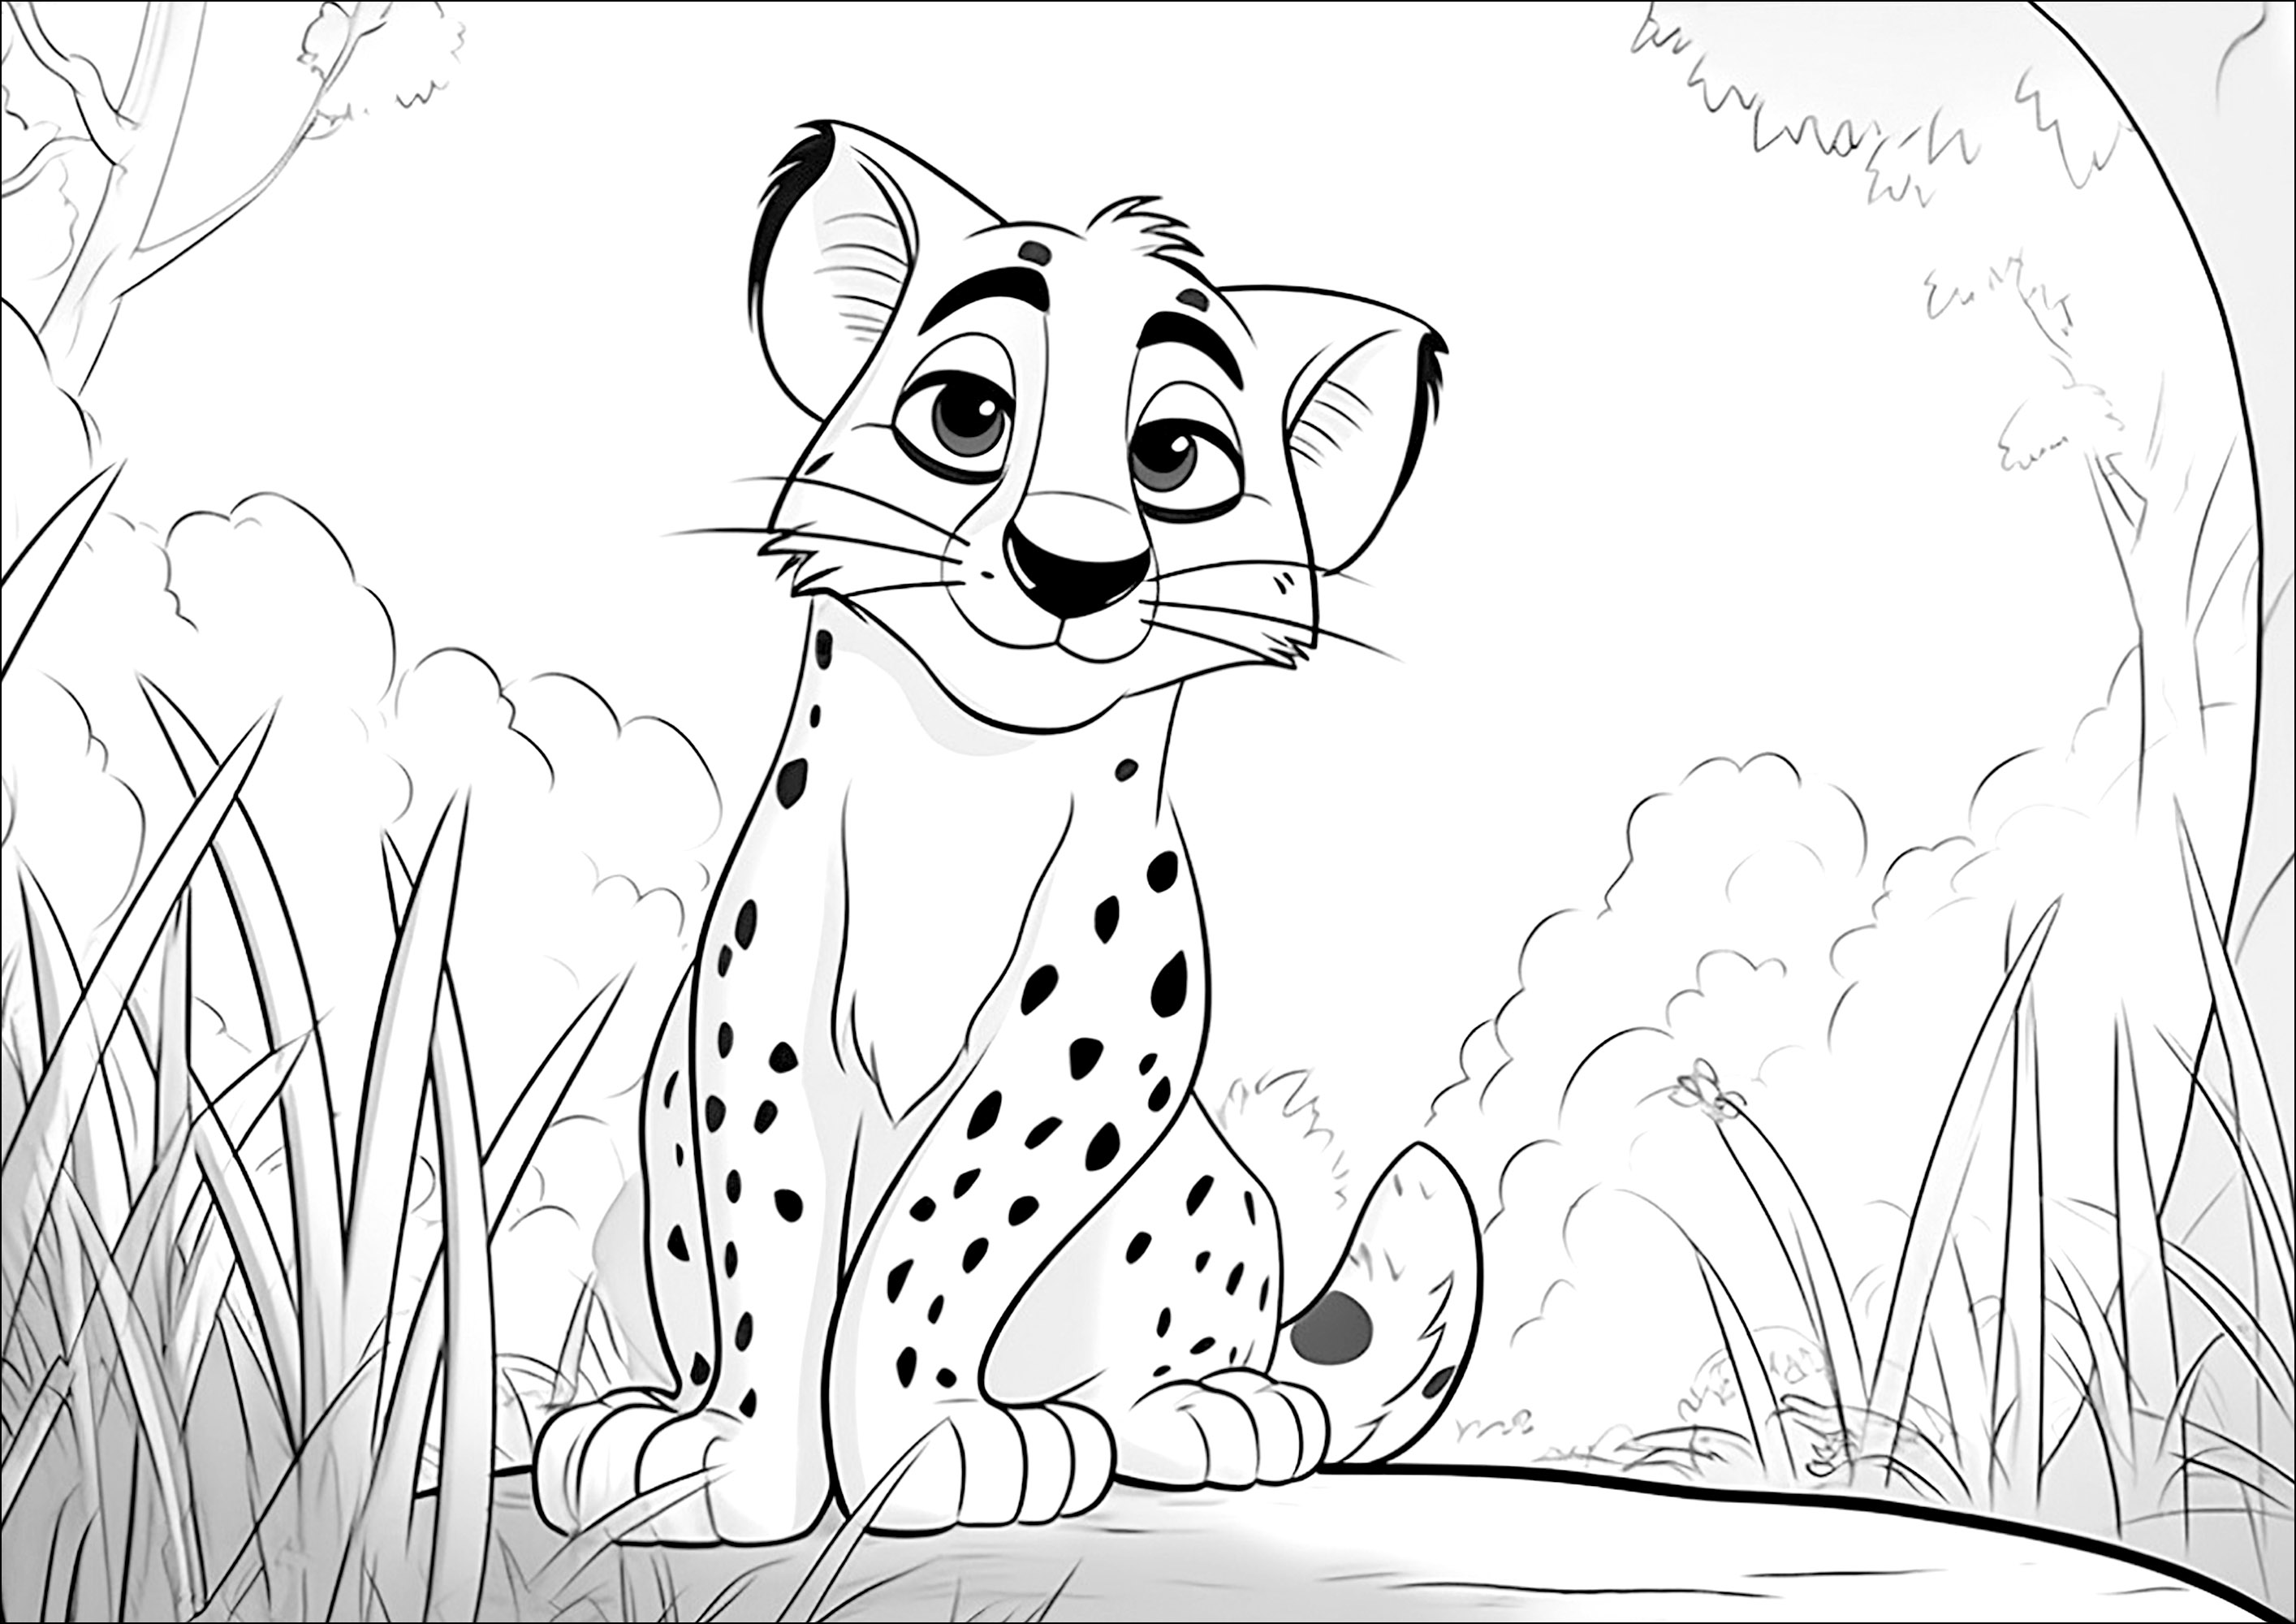 Cheetah simple coloring page. Simple coloring, Disney / Pixar style